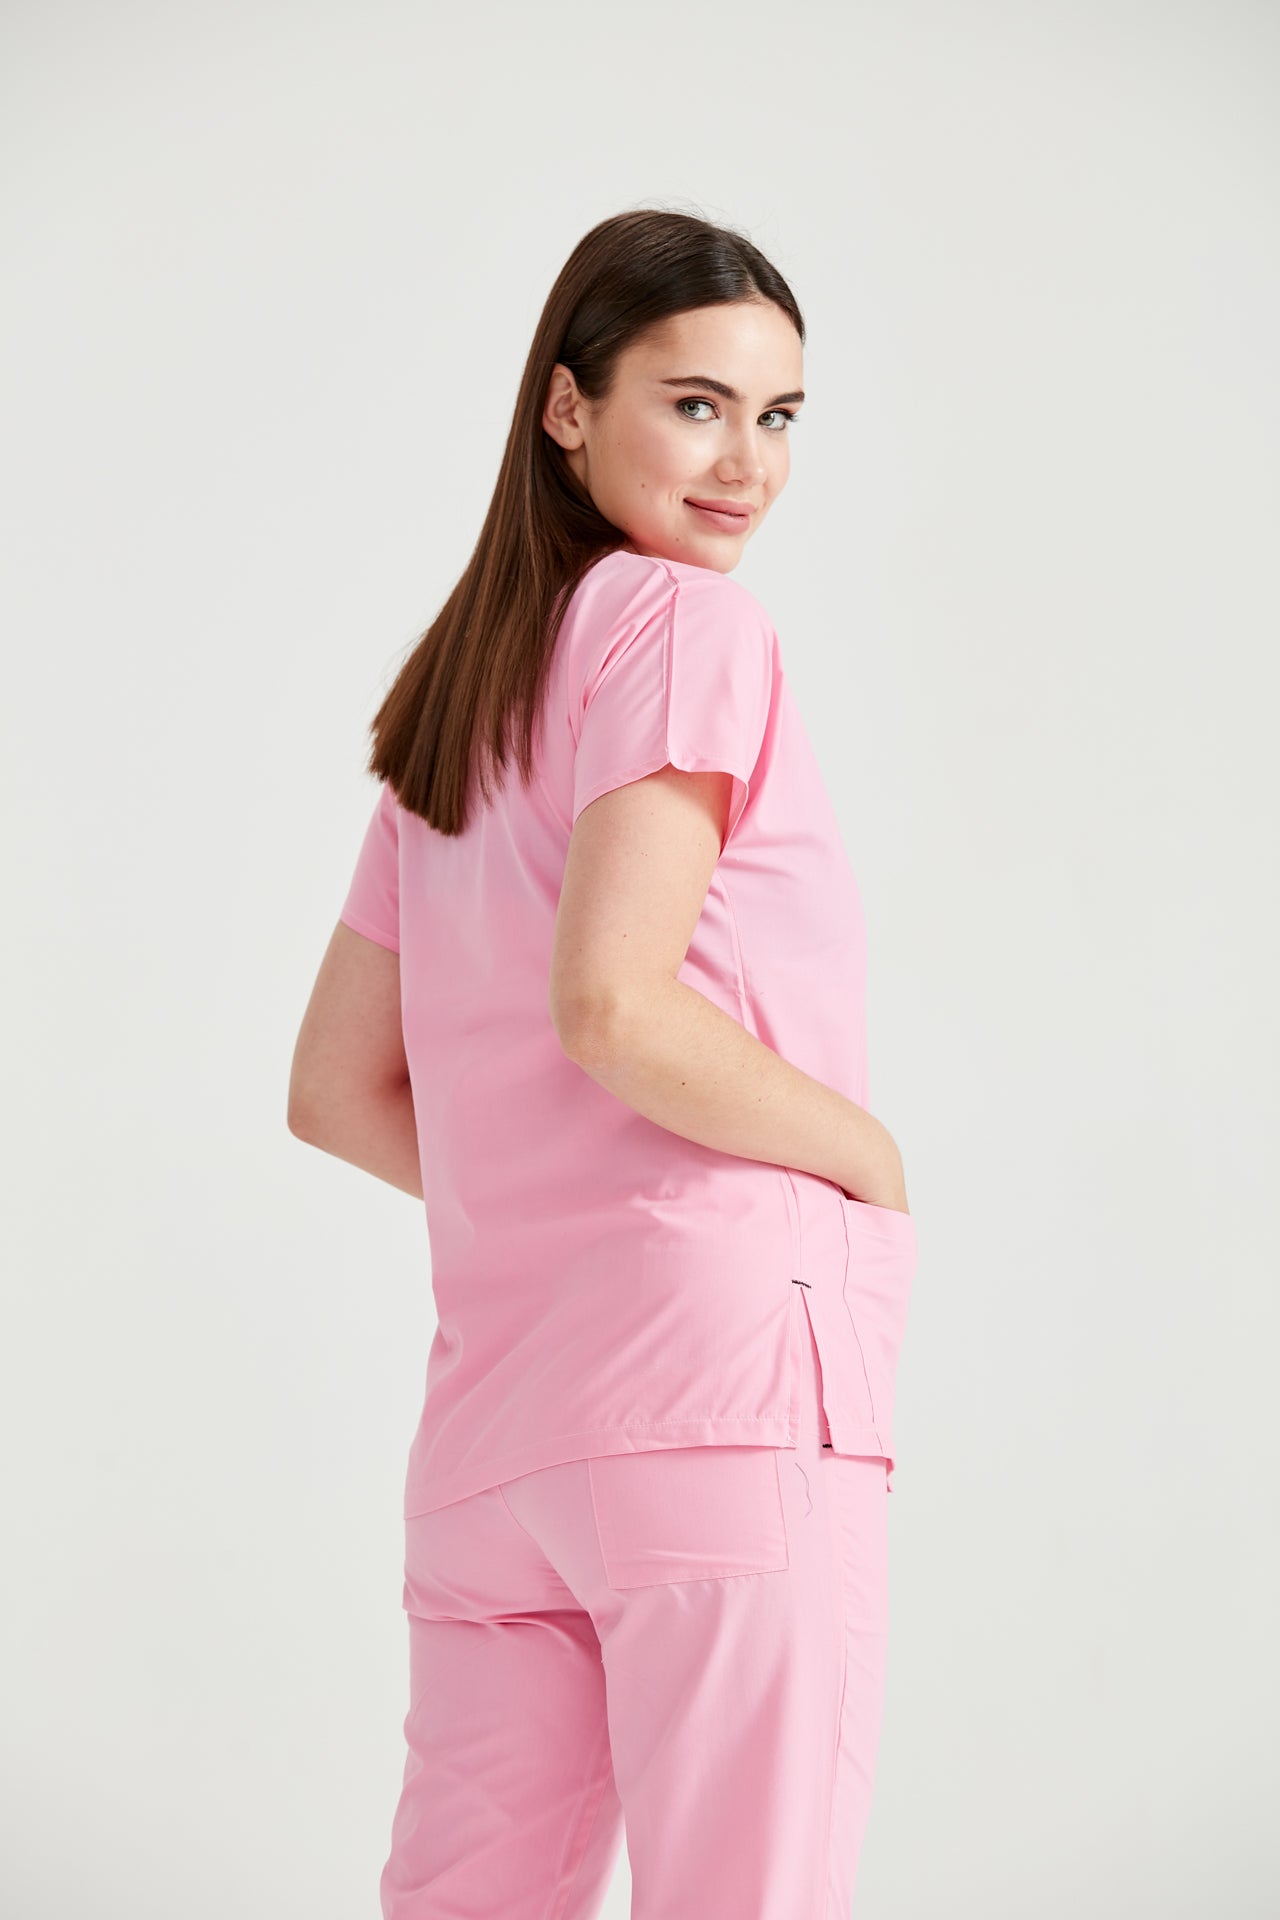 Asistenta medicala imbracata in costum roz Baby Pink, vedere din spate